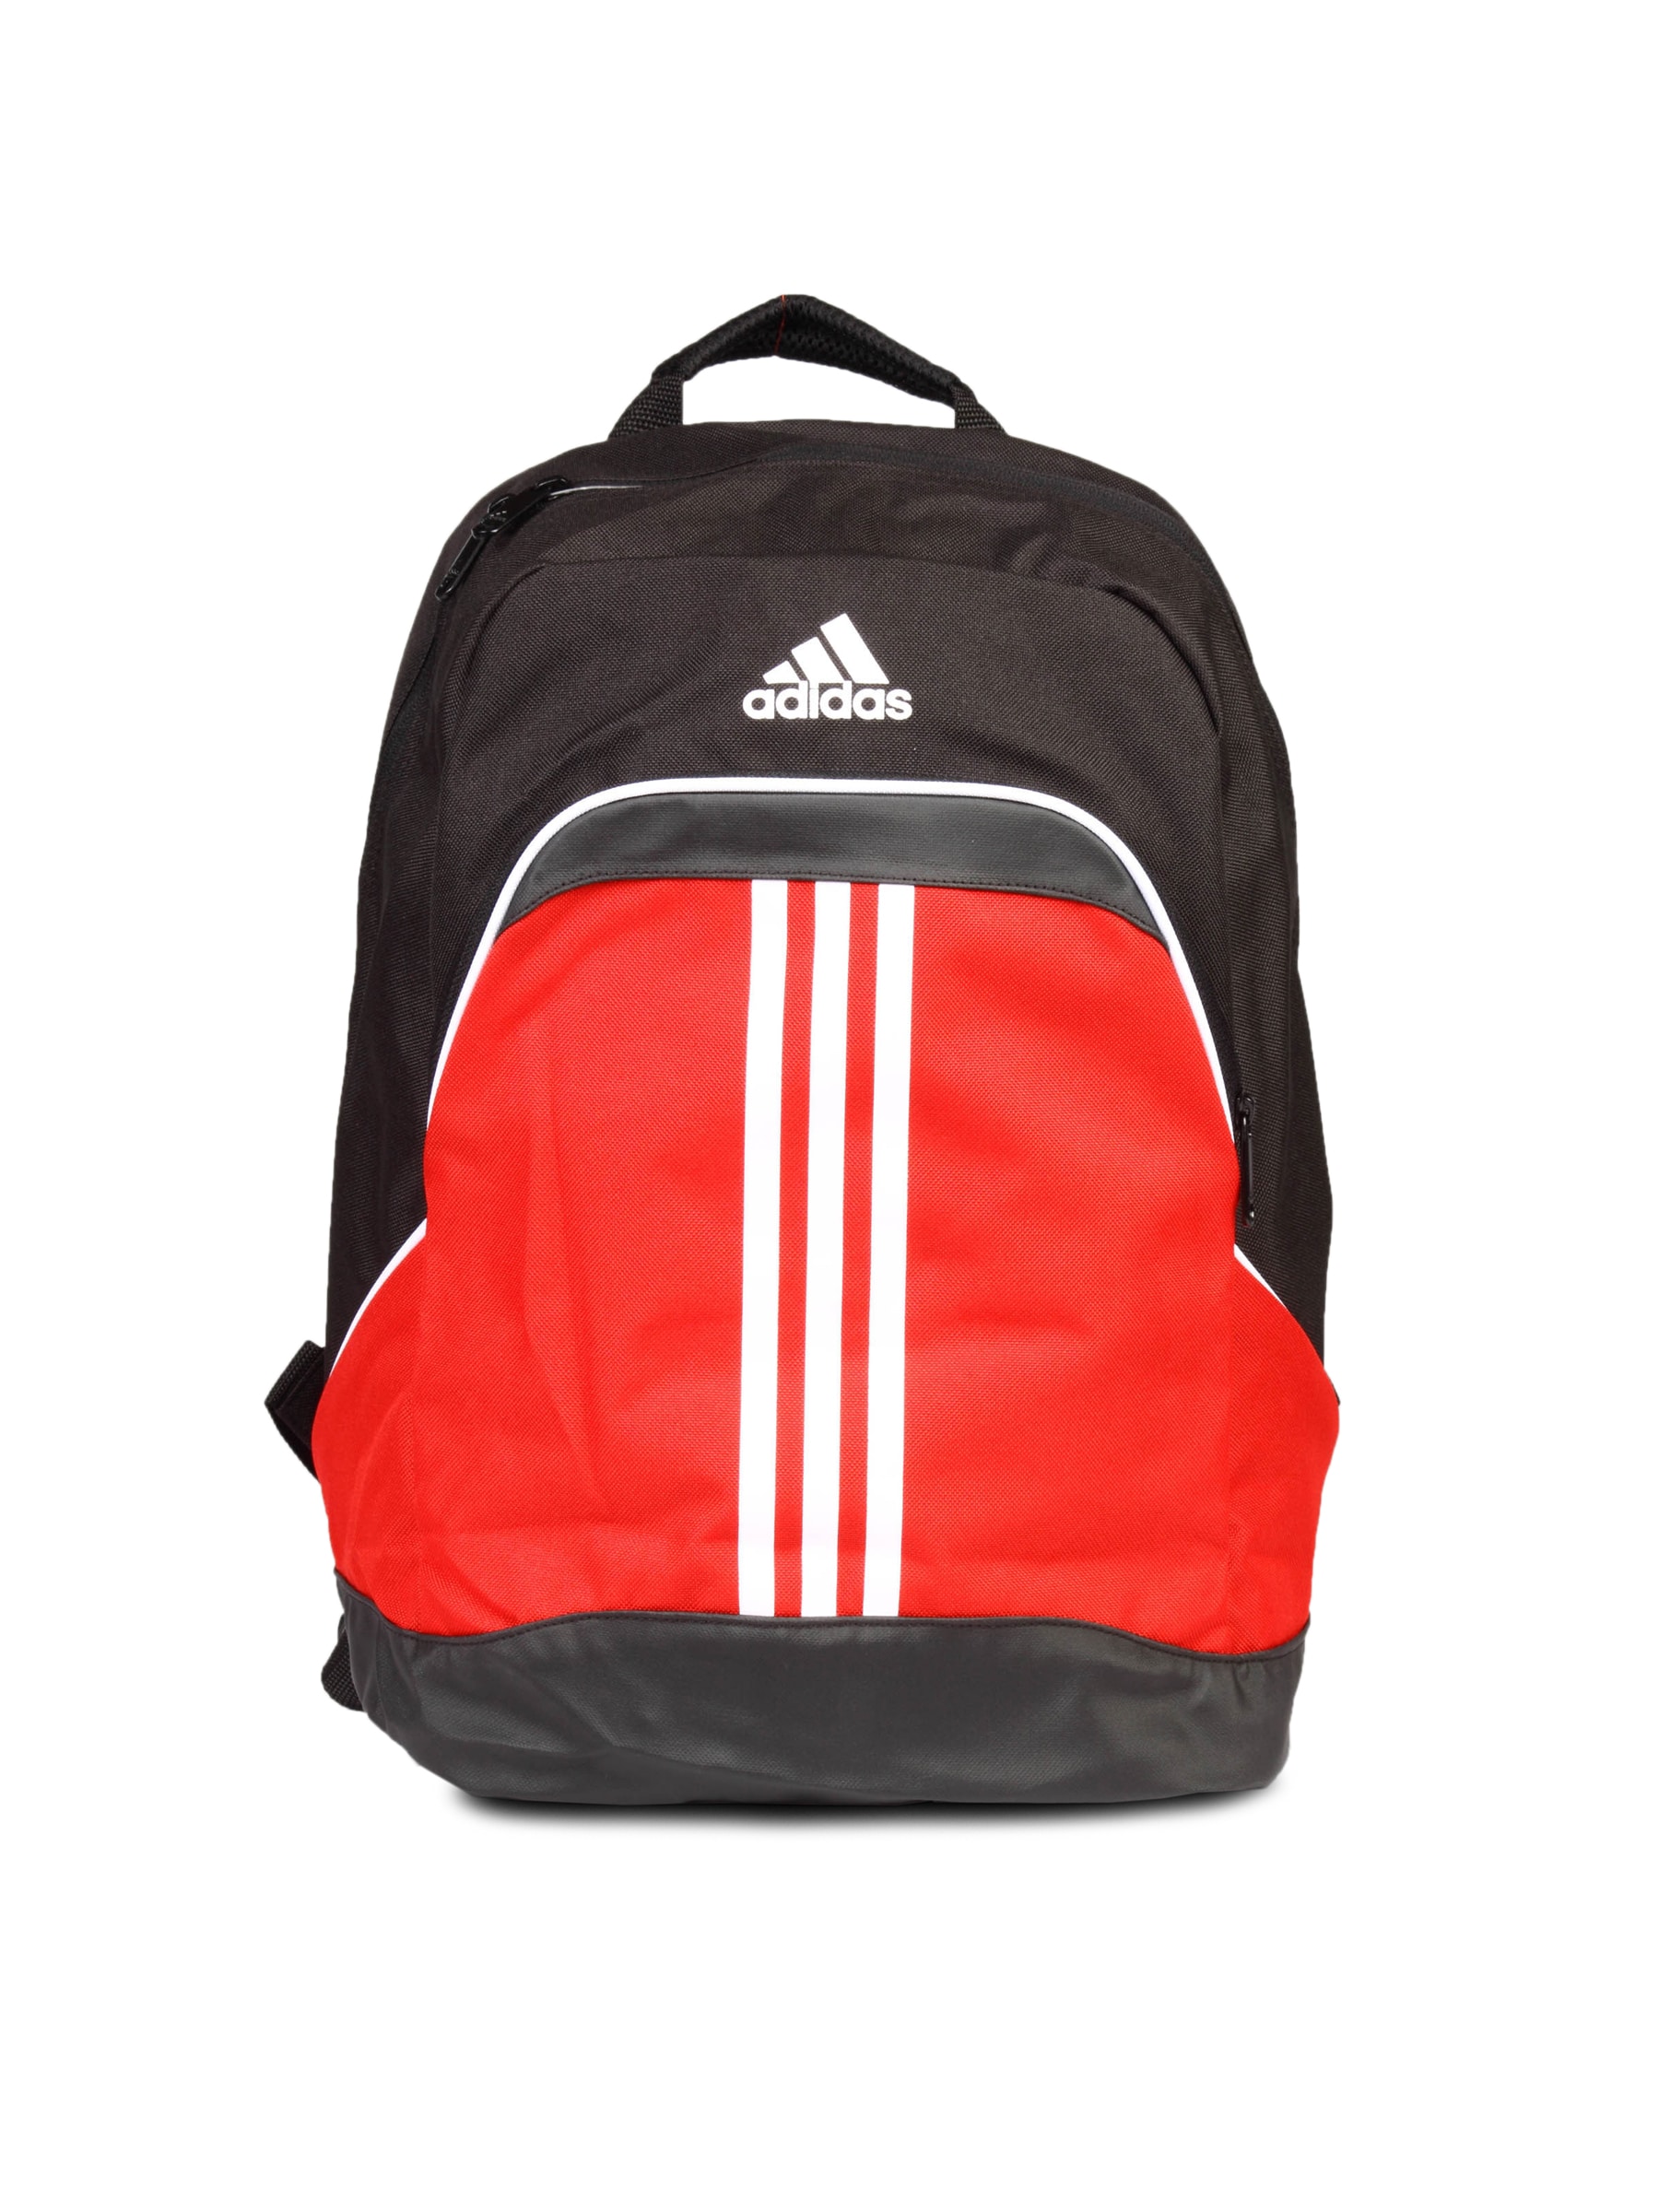 ADIDAS Men Tiro Black Red Backpack